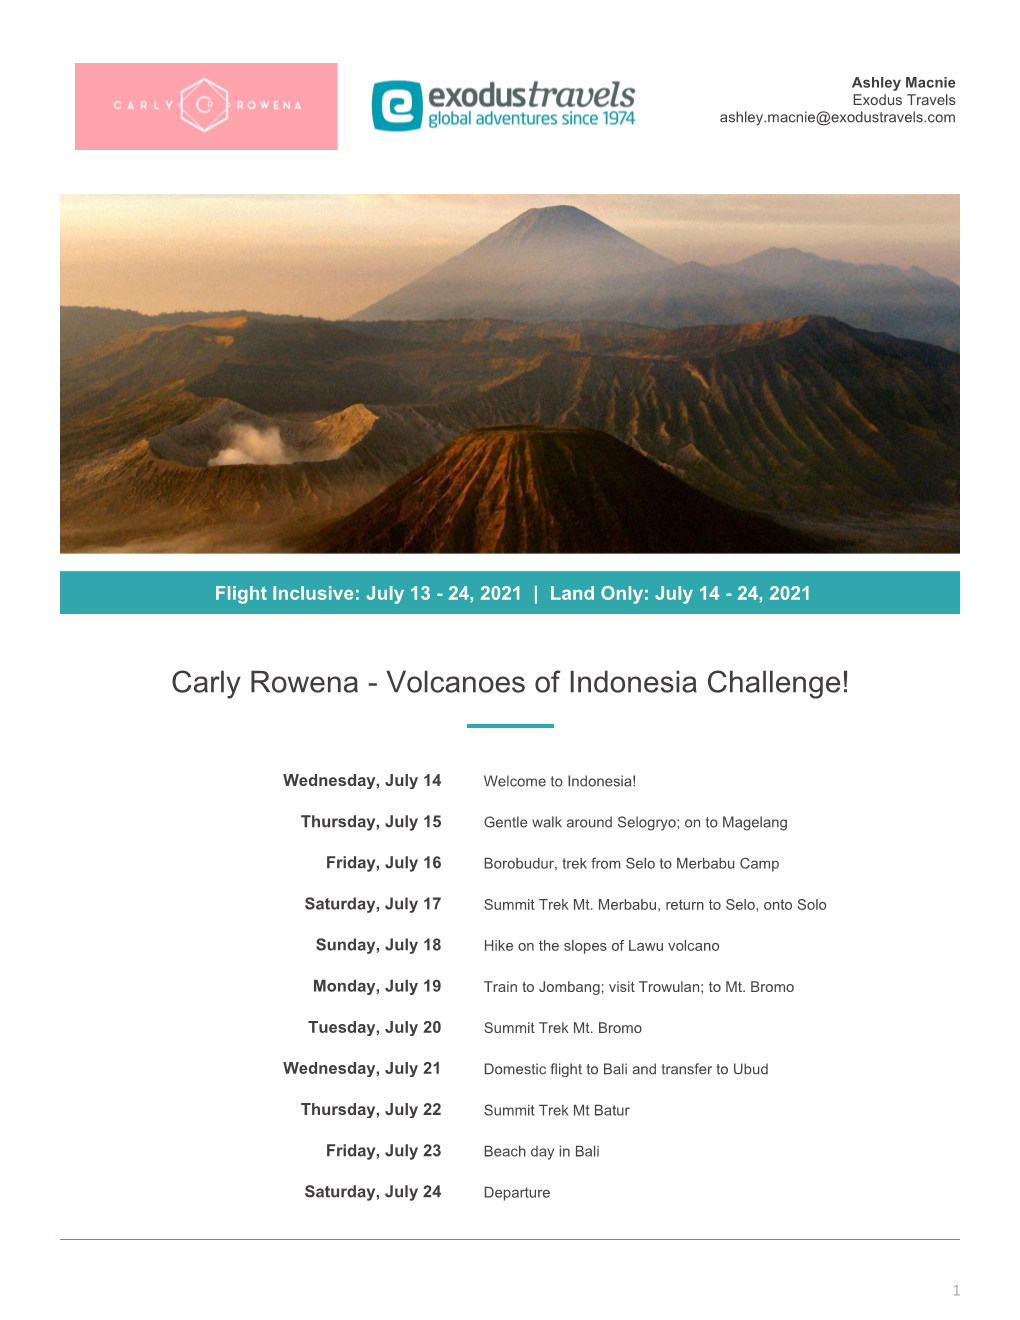 Carly Rowena - Volcanoes of Indonesia Challenge!